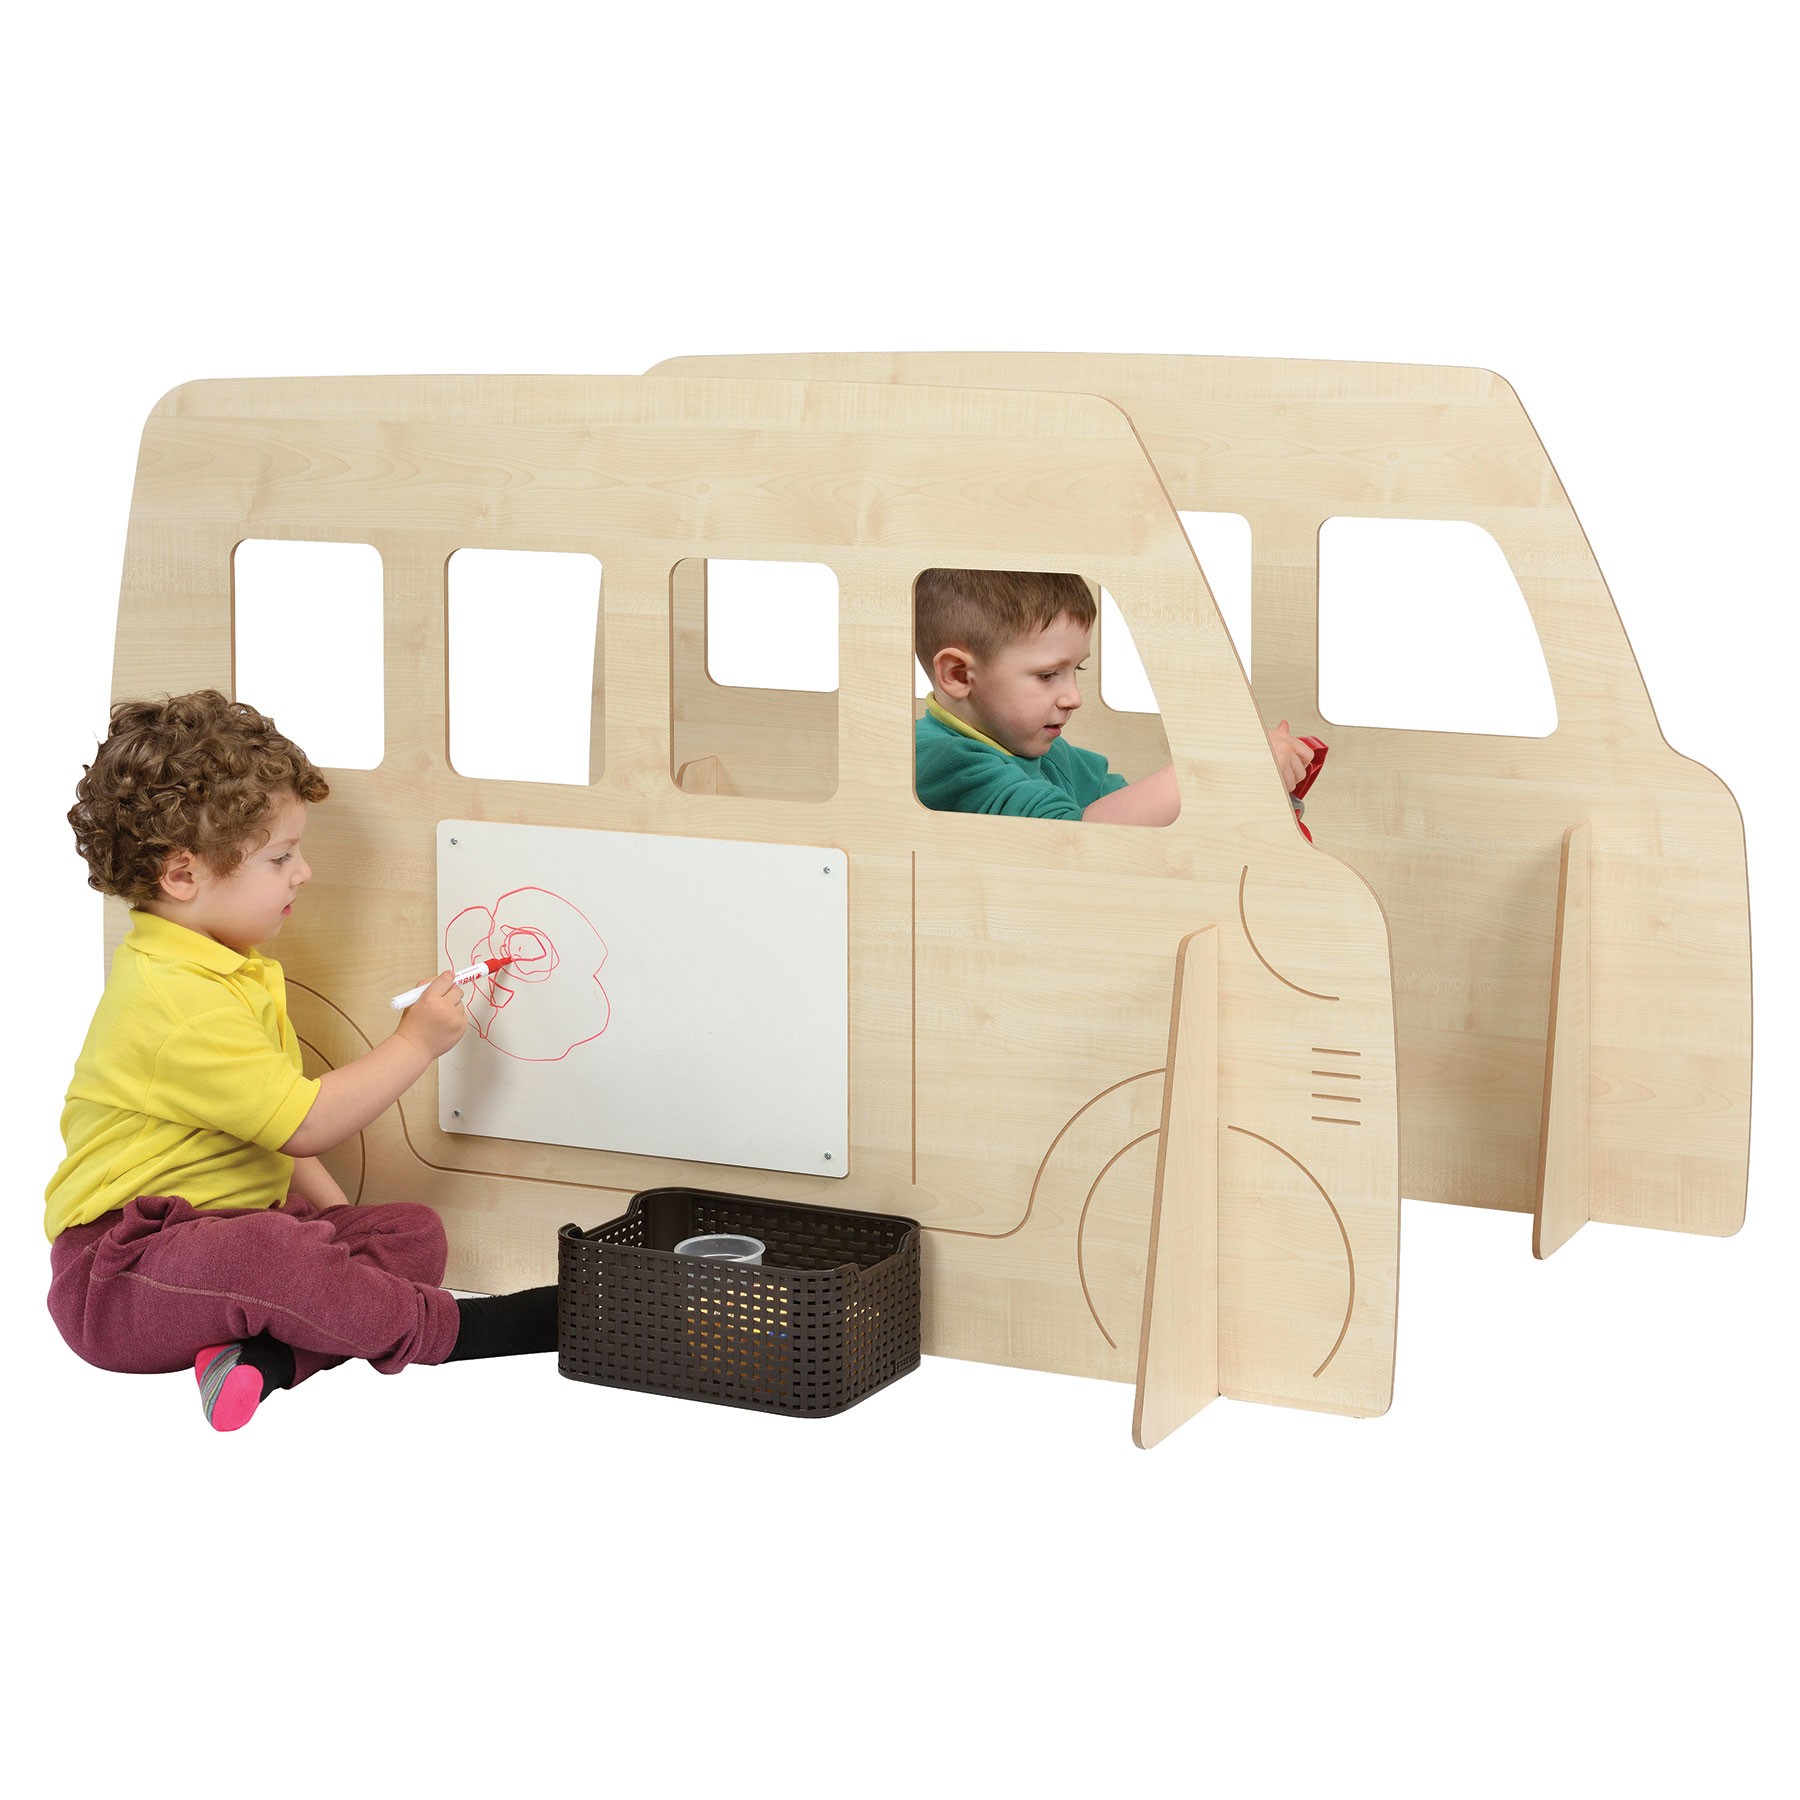 Children's Play Double Bus Panel